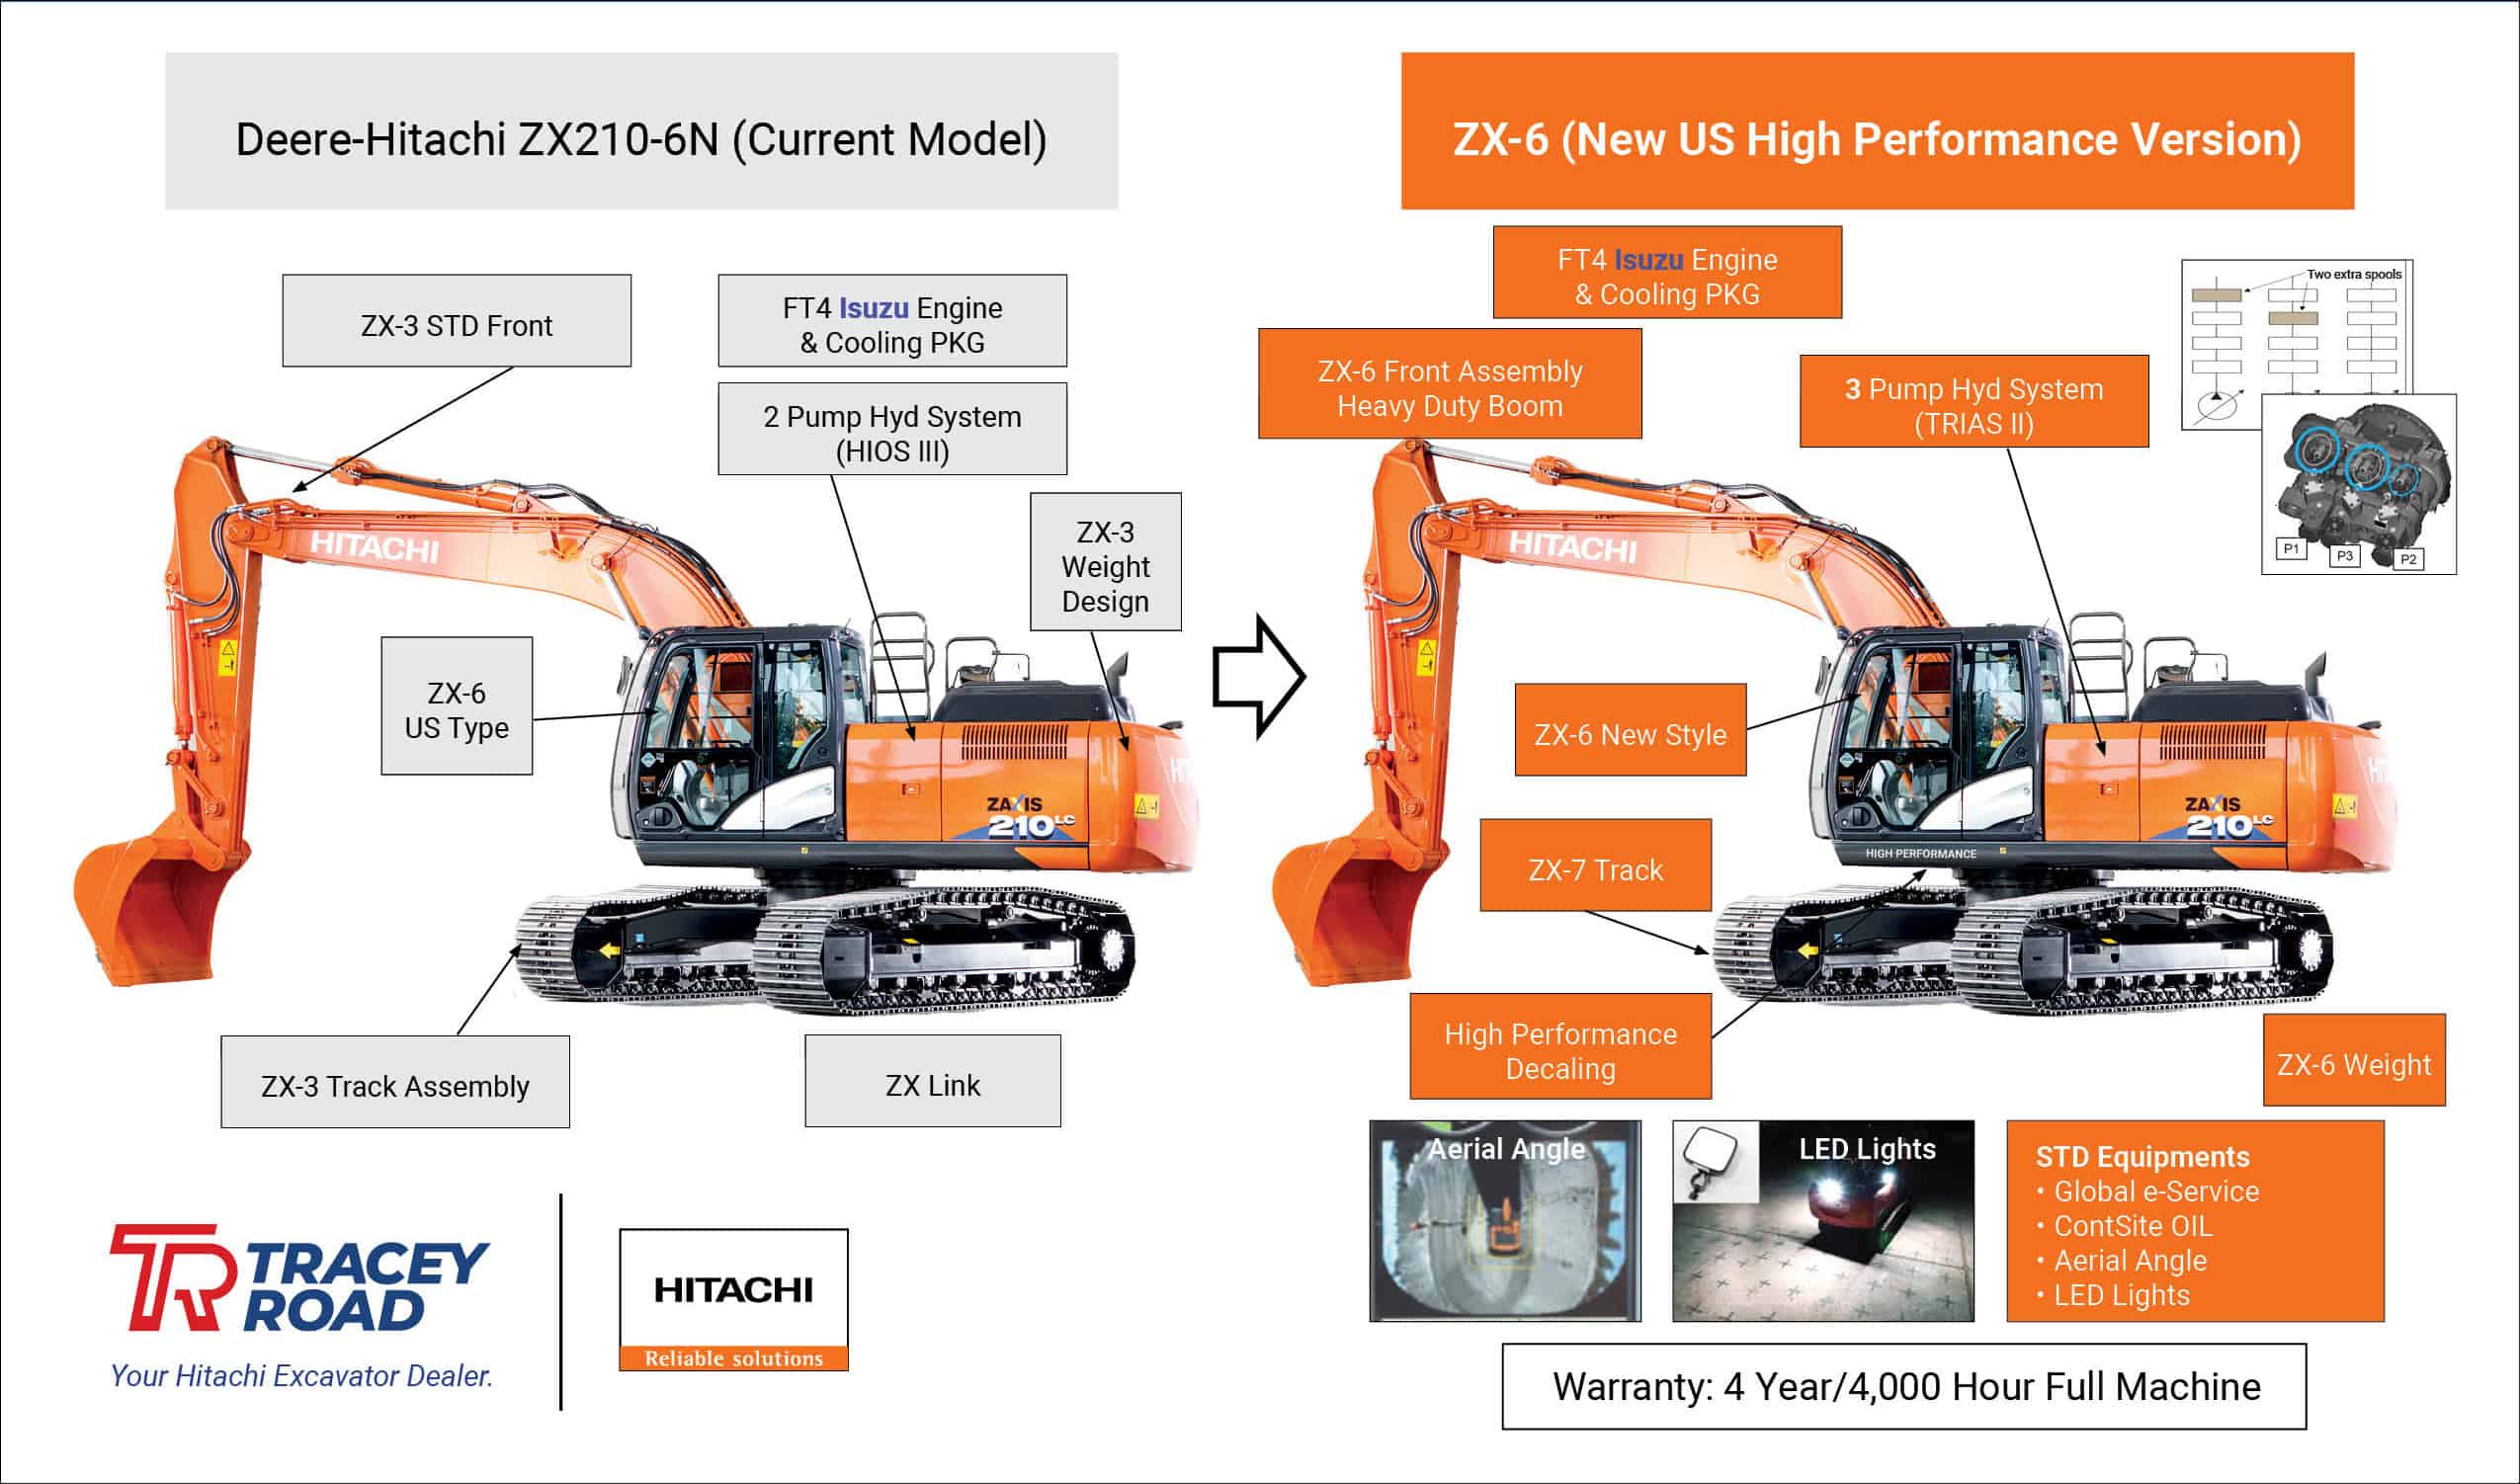 Hitachi – ZX-6N/JDG (Current) vs ZX-6 (New US High Performance 